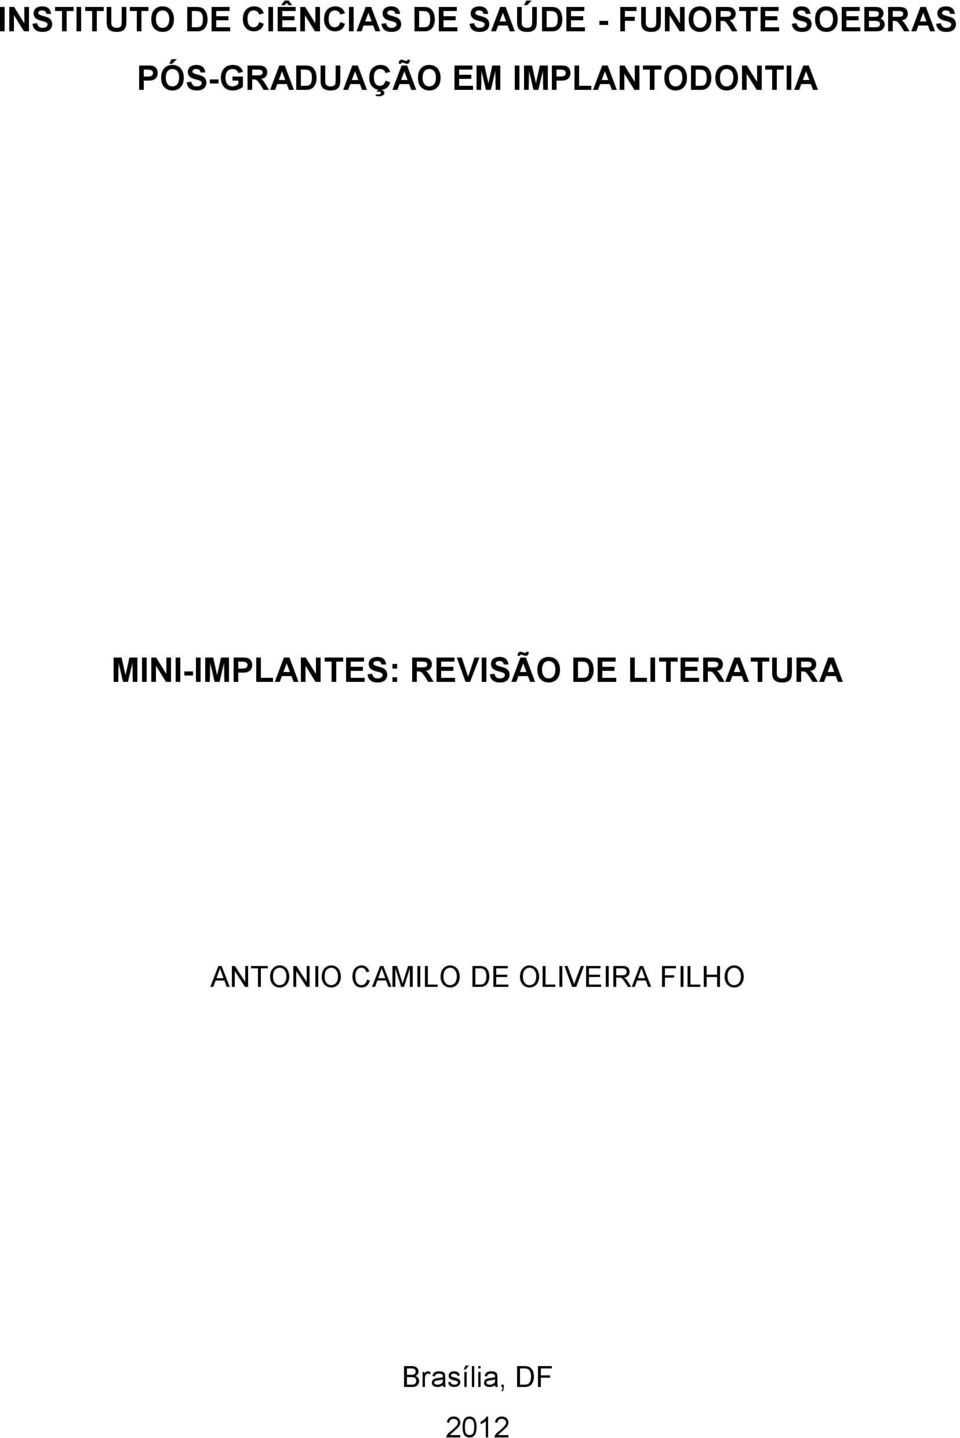 MINI-IMPLANTES: REVISÃO DE LITERATURA